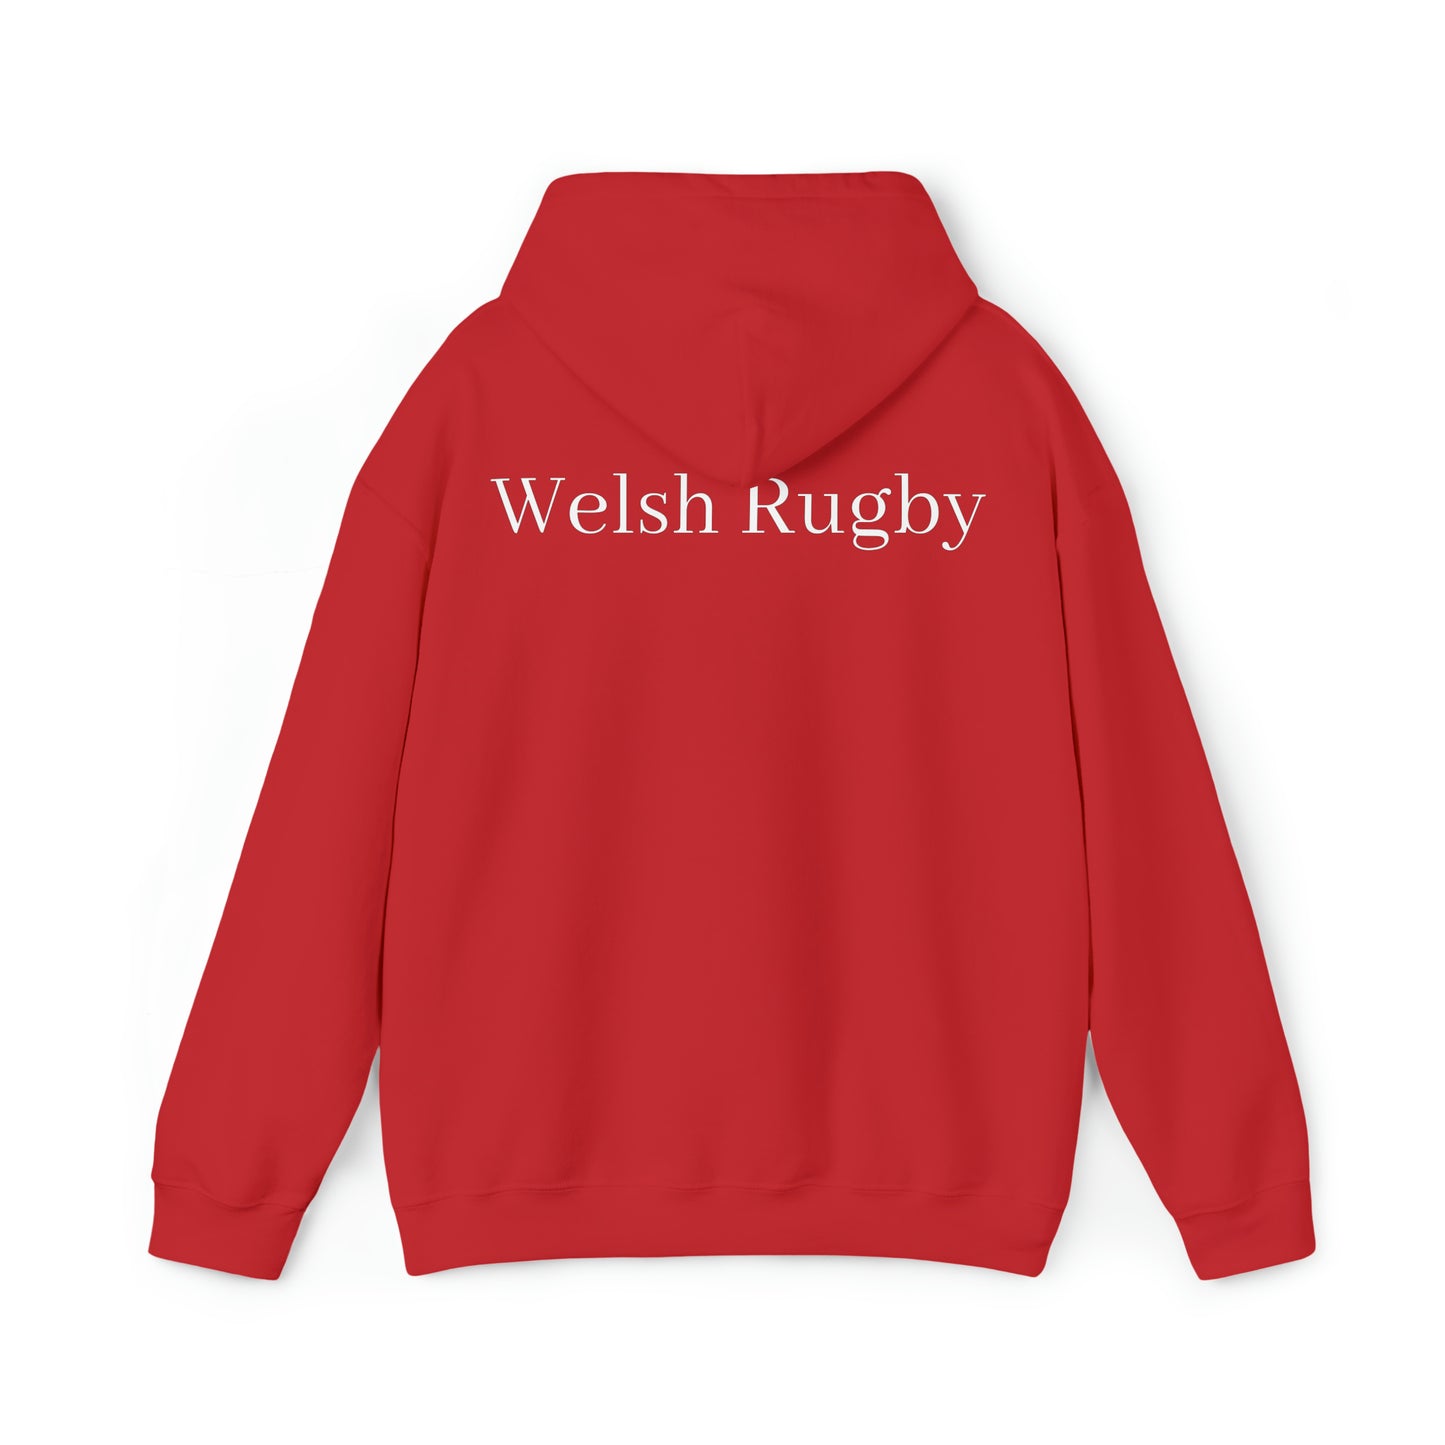 Wales Lifting RWC - dark hoodies